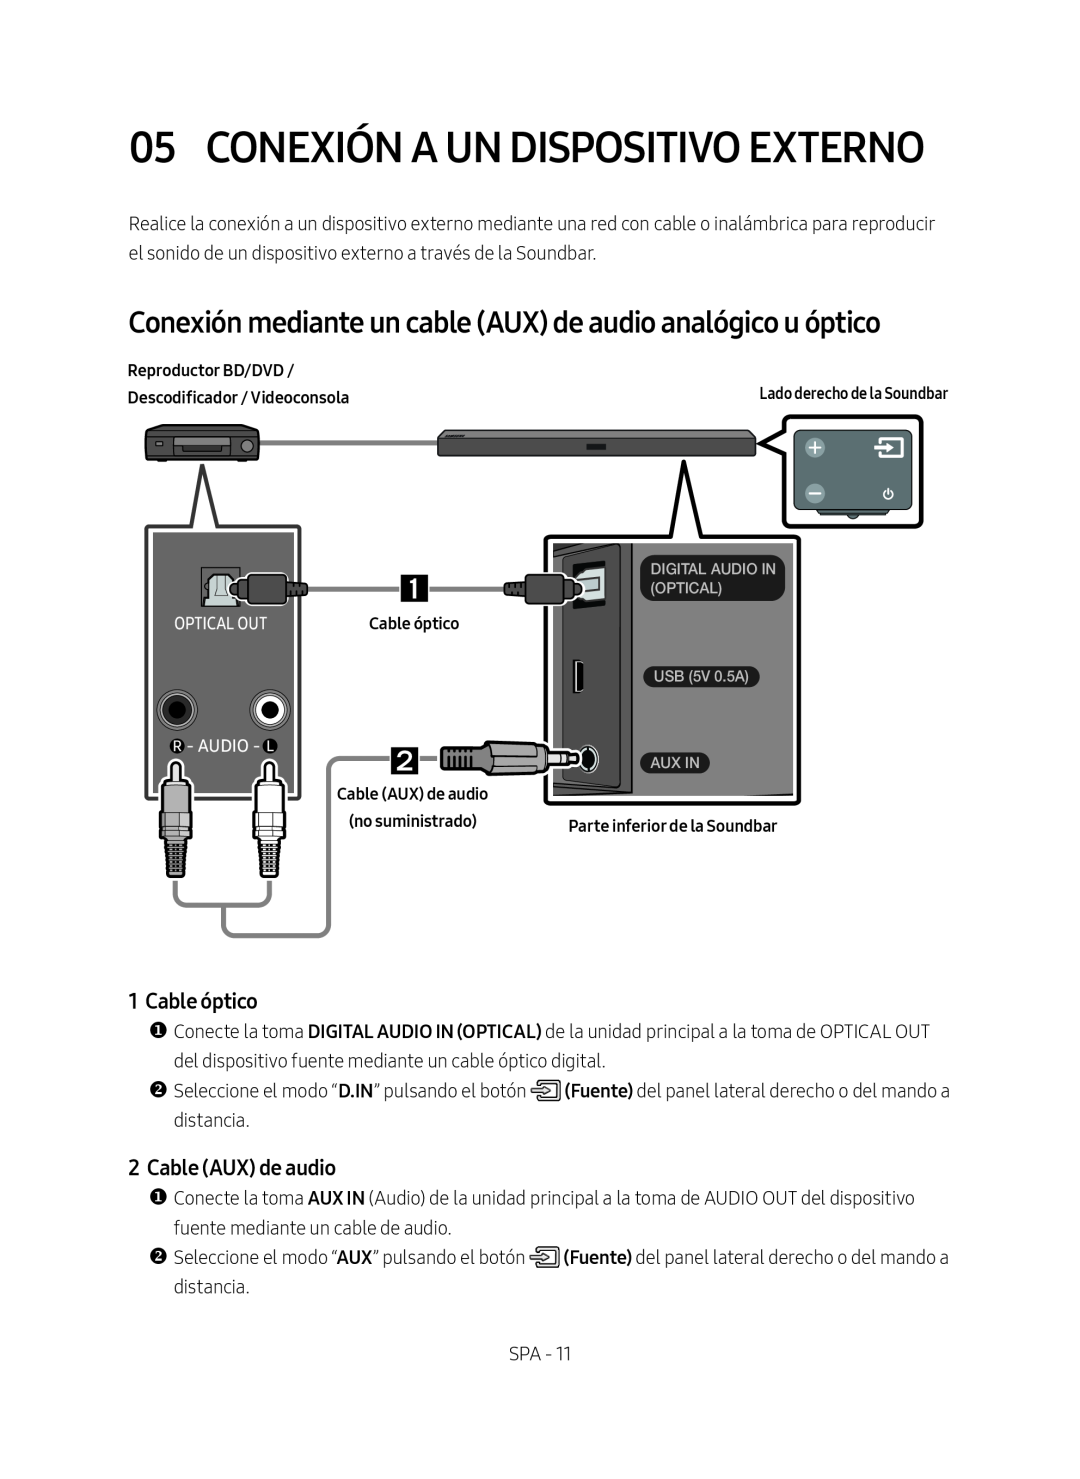 Samsung HW-M450/ZG manual Conexión A Un Dispositivo Externo, Conexión mediante un cable AUX de audio analógico u óptico 